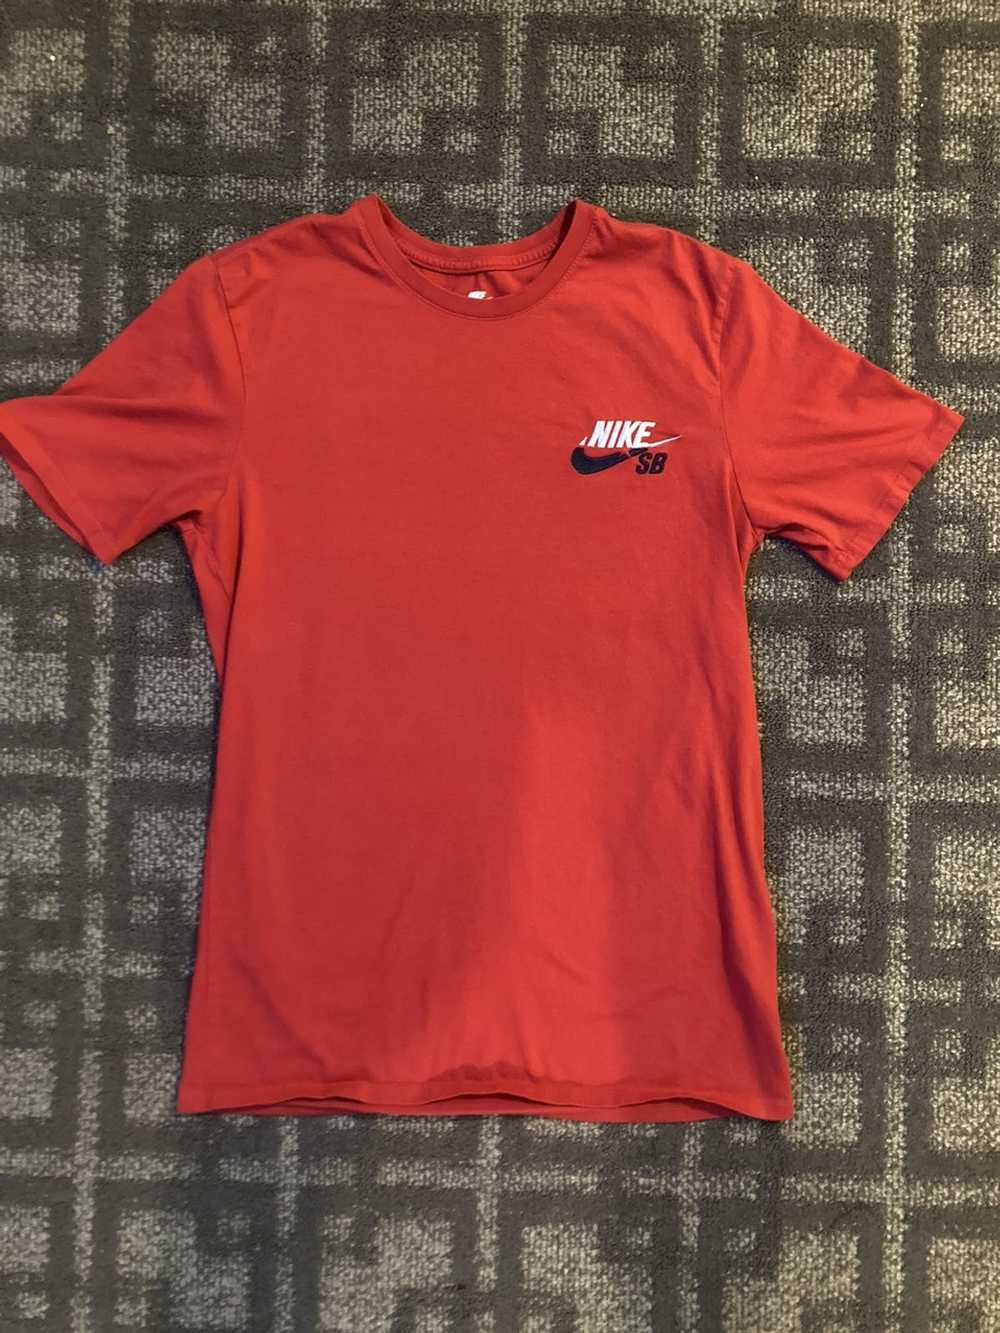 Nike Nike sb t shirt - image 1